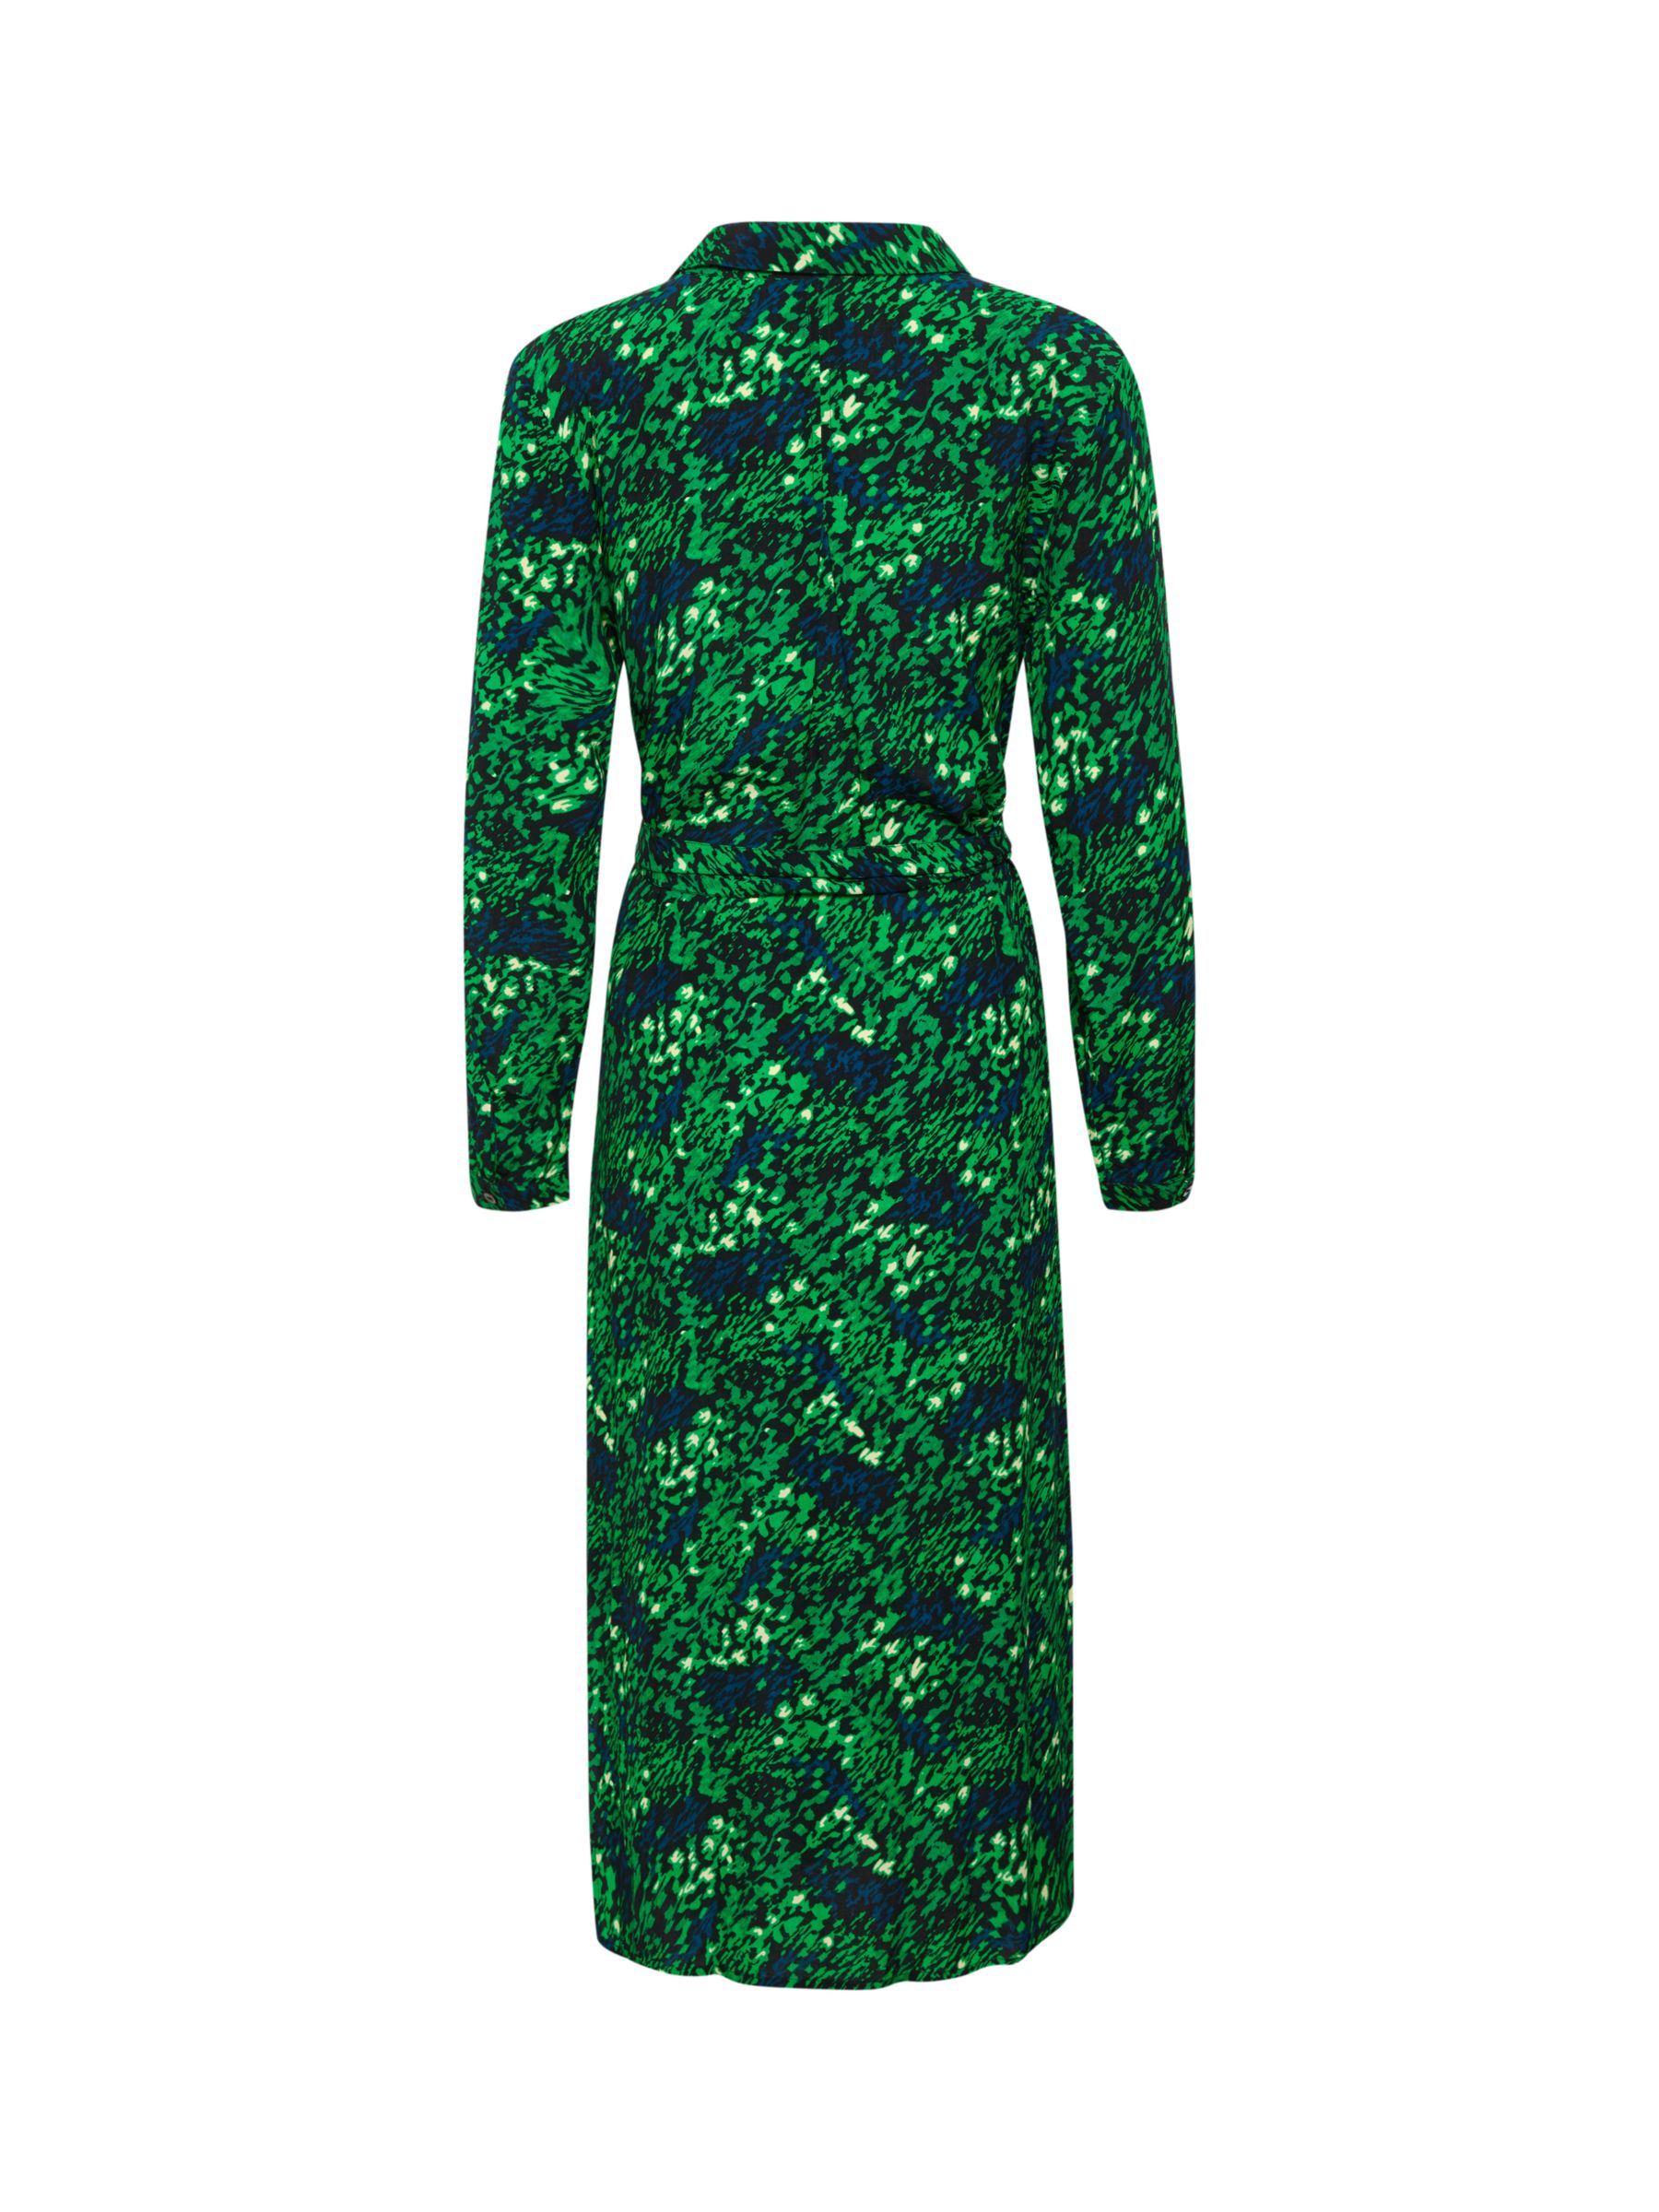 Partners Green Abstract Verdant Long & John Saint Shirt Dress, at Brushed Print Lewis Blanca Tropez Midi Sleeve